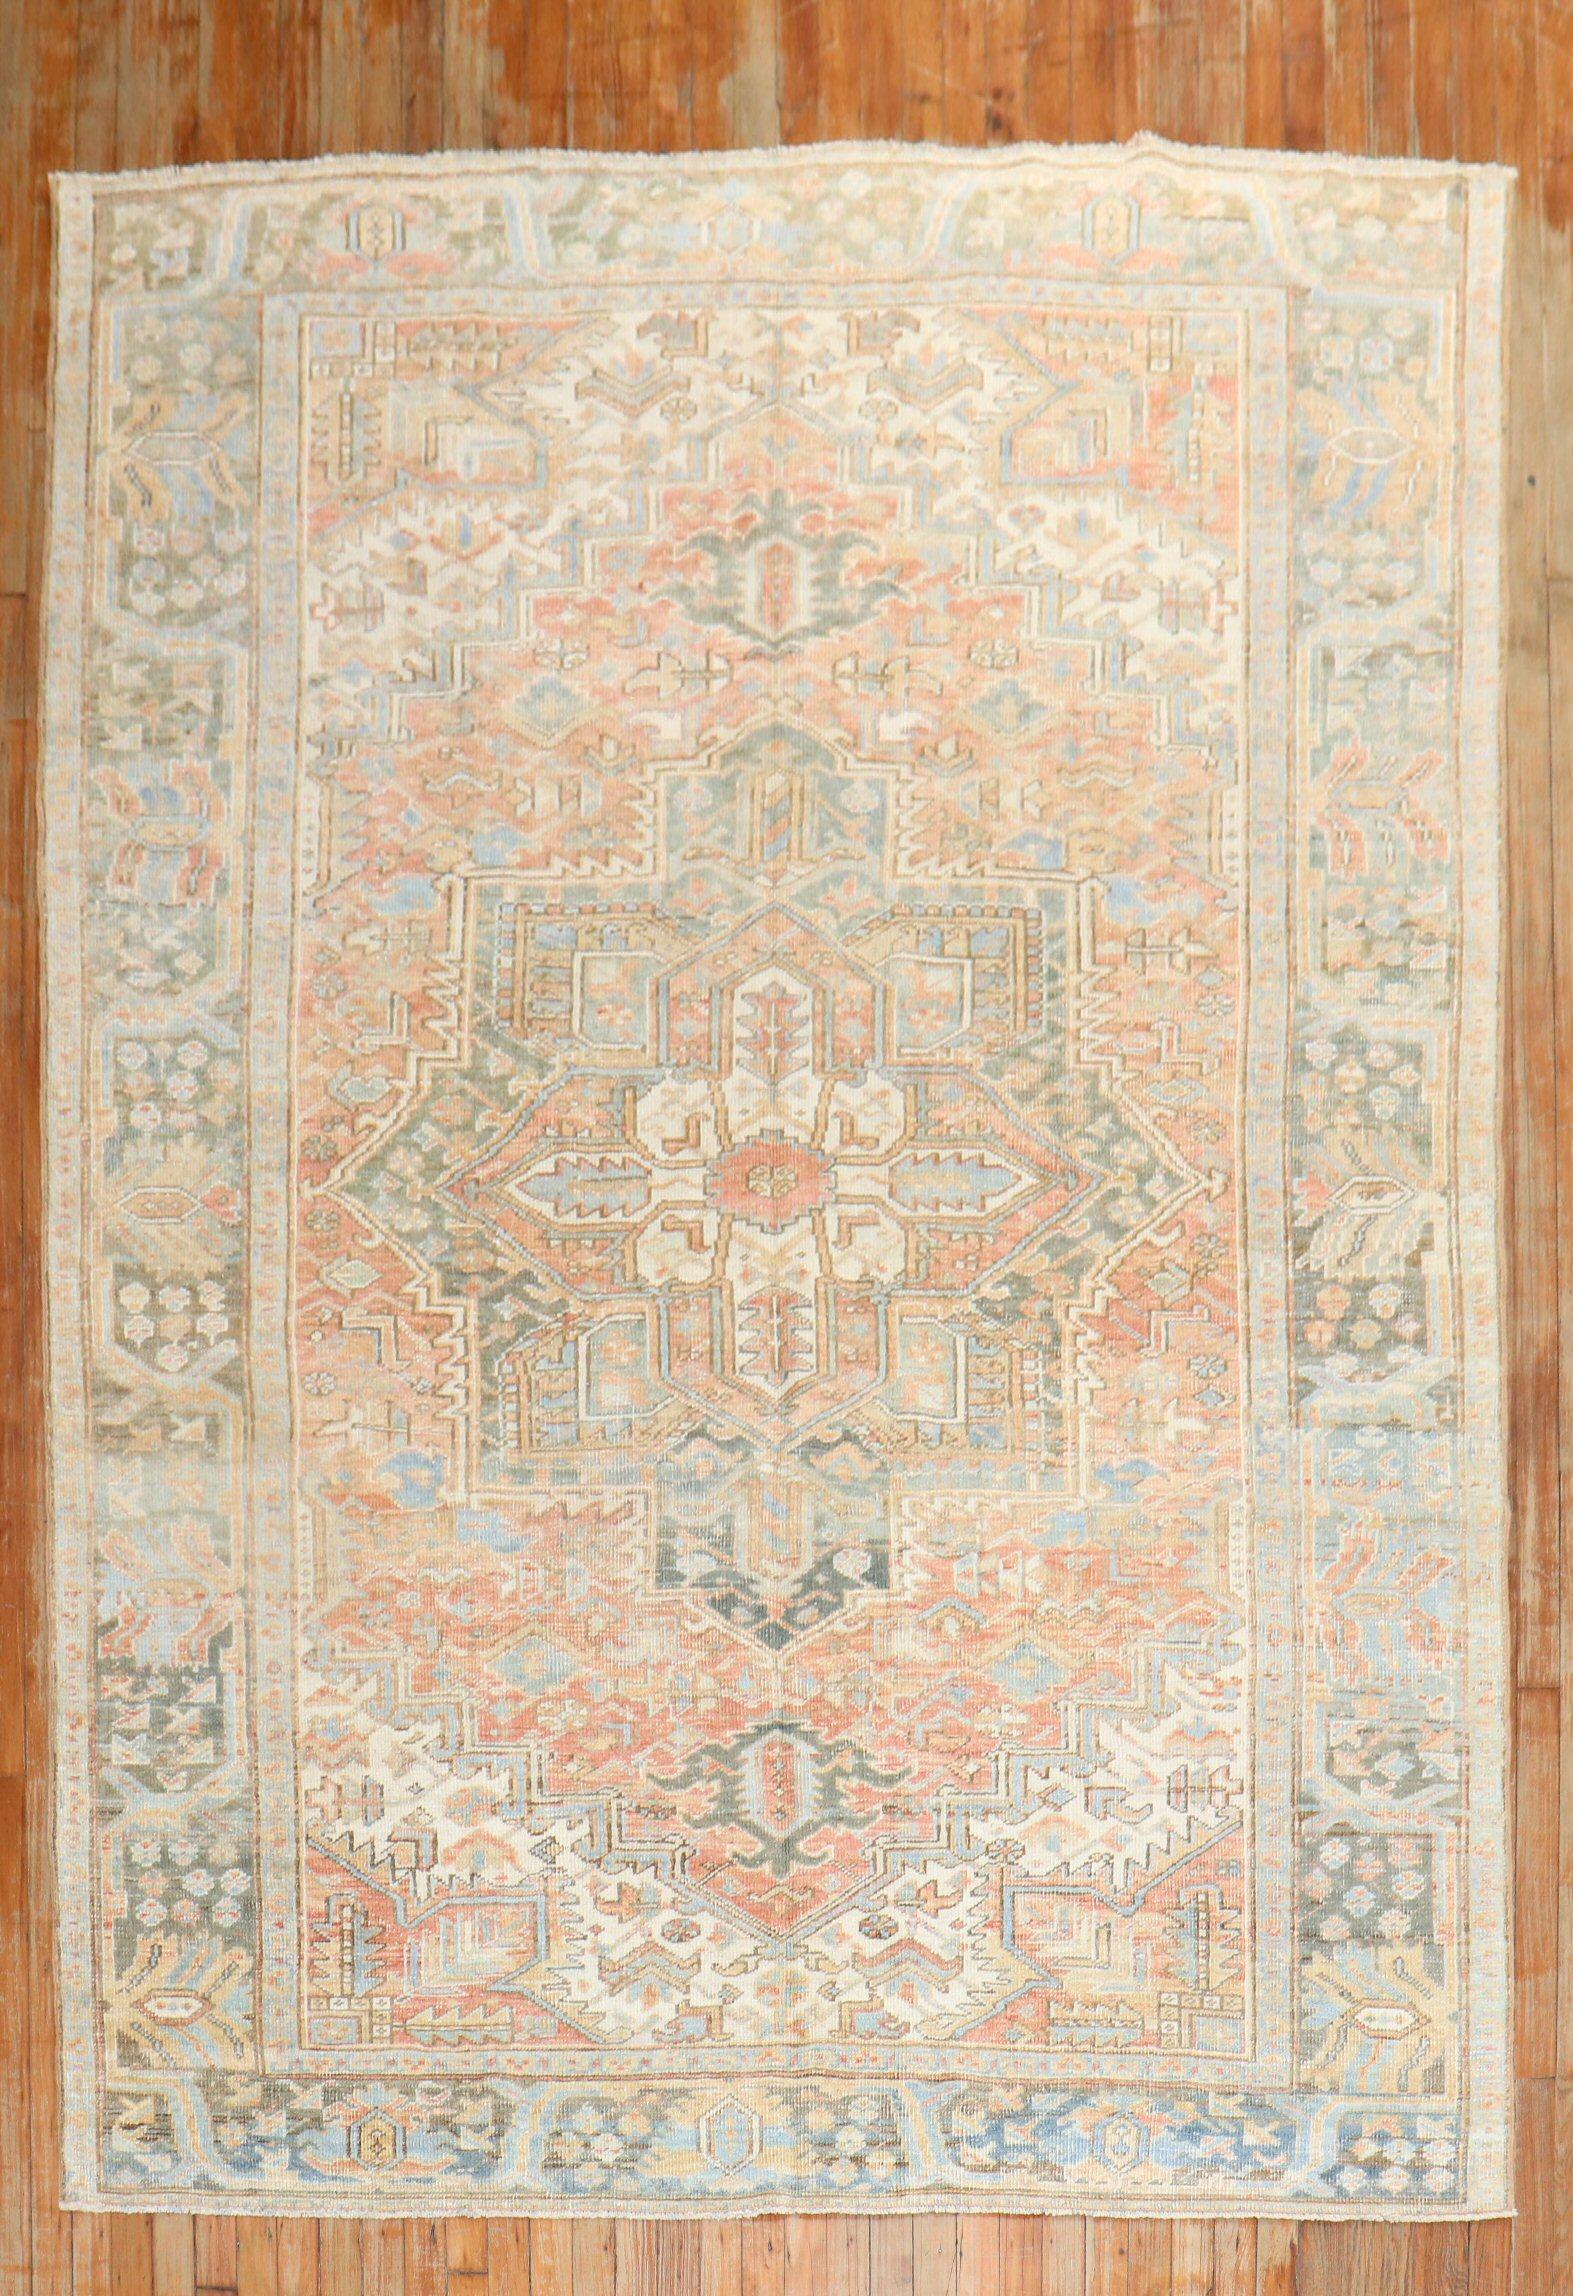 Mid-20th century Intermediate size Persian Heriz rug in light colors

Measures: 6'8'' x 8'11''.